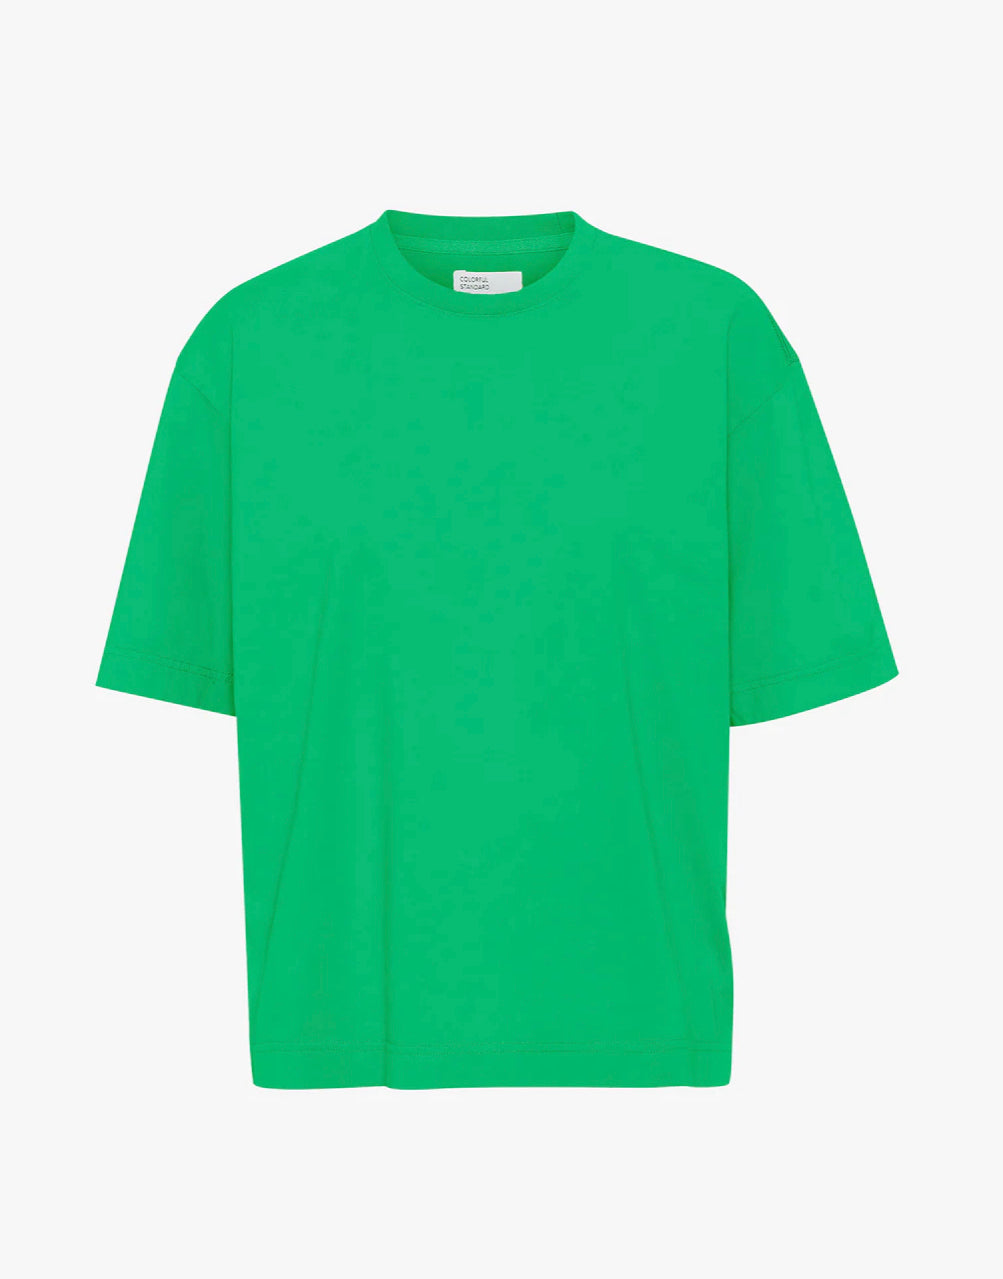 T-shirt Oversized Organic -  kelly groen (kelly green)